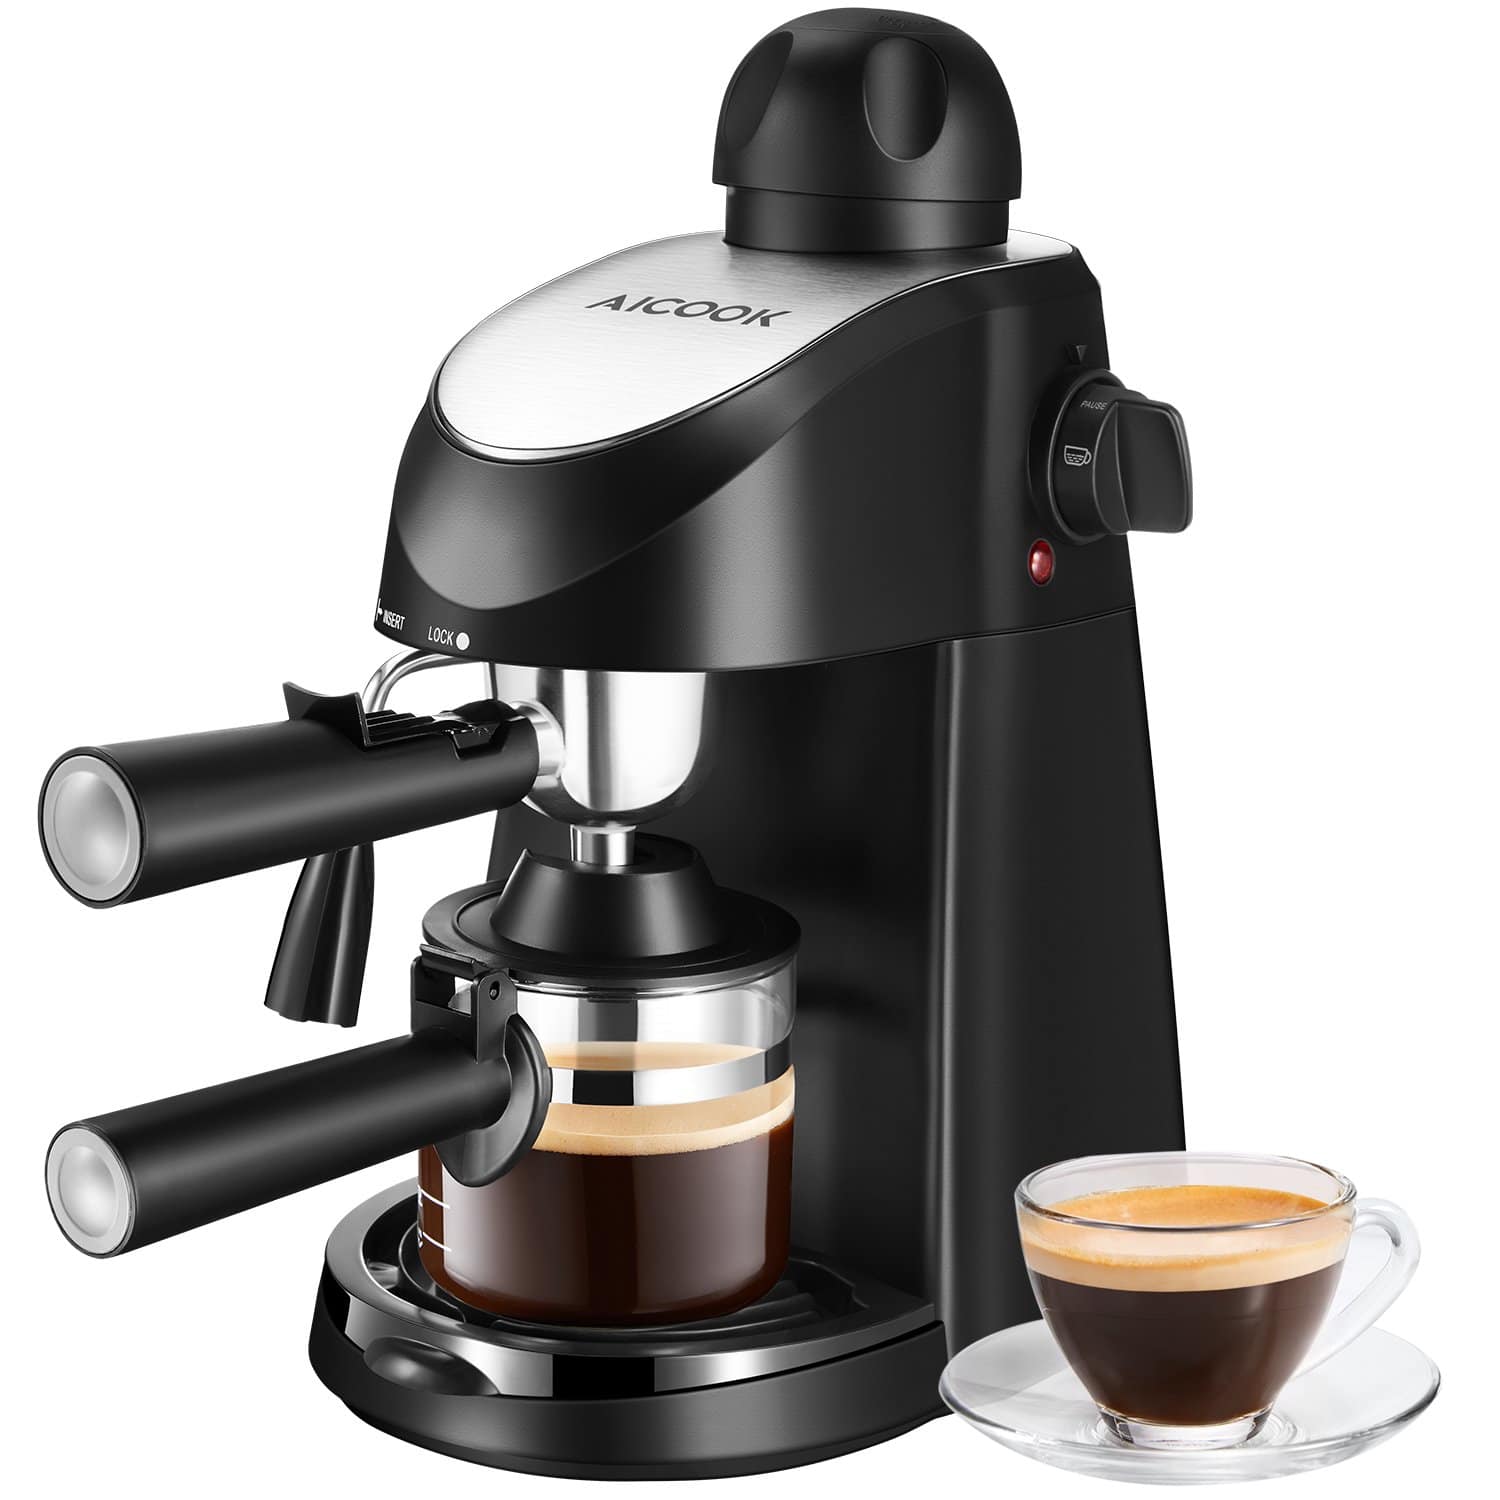 Aicook Espresso Coffee Machine